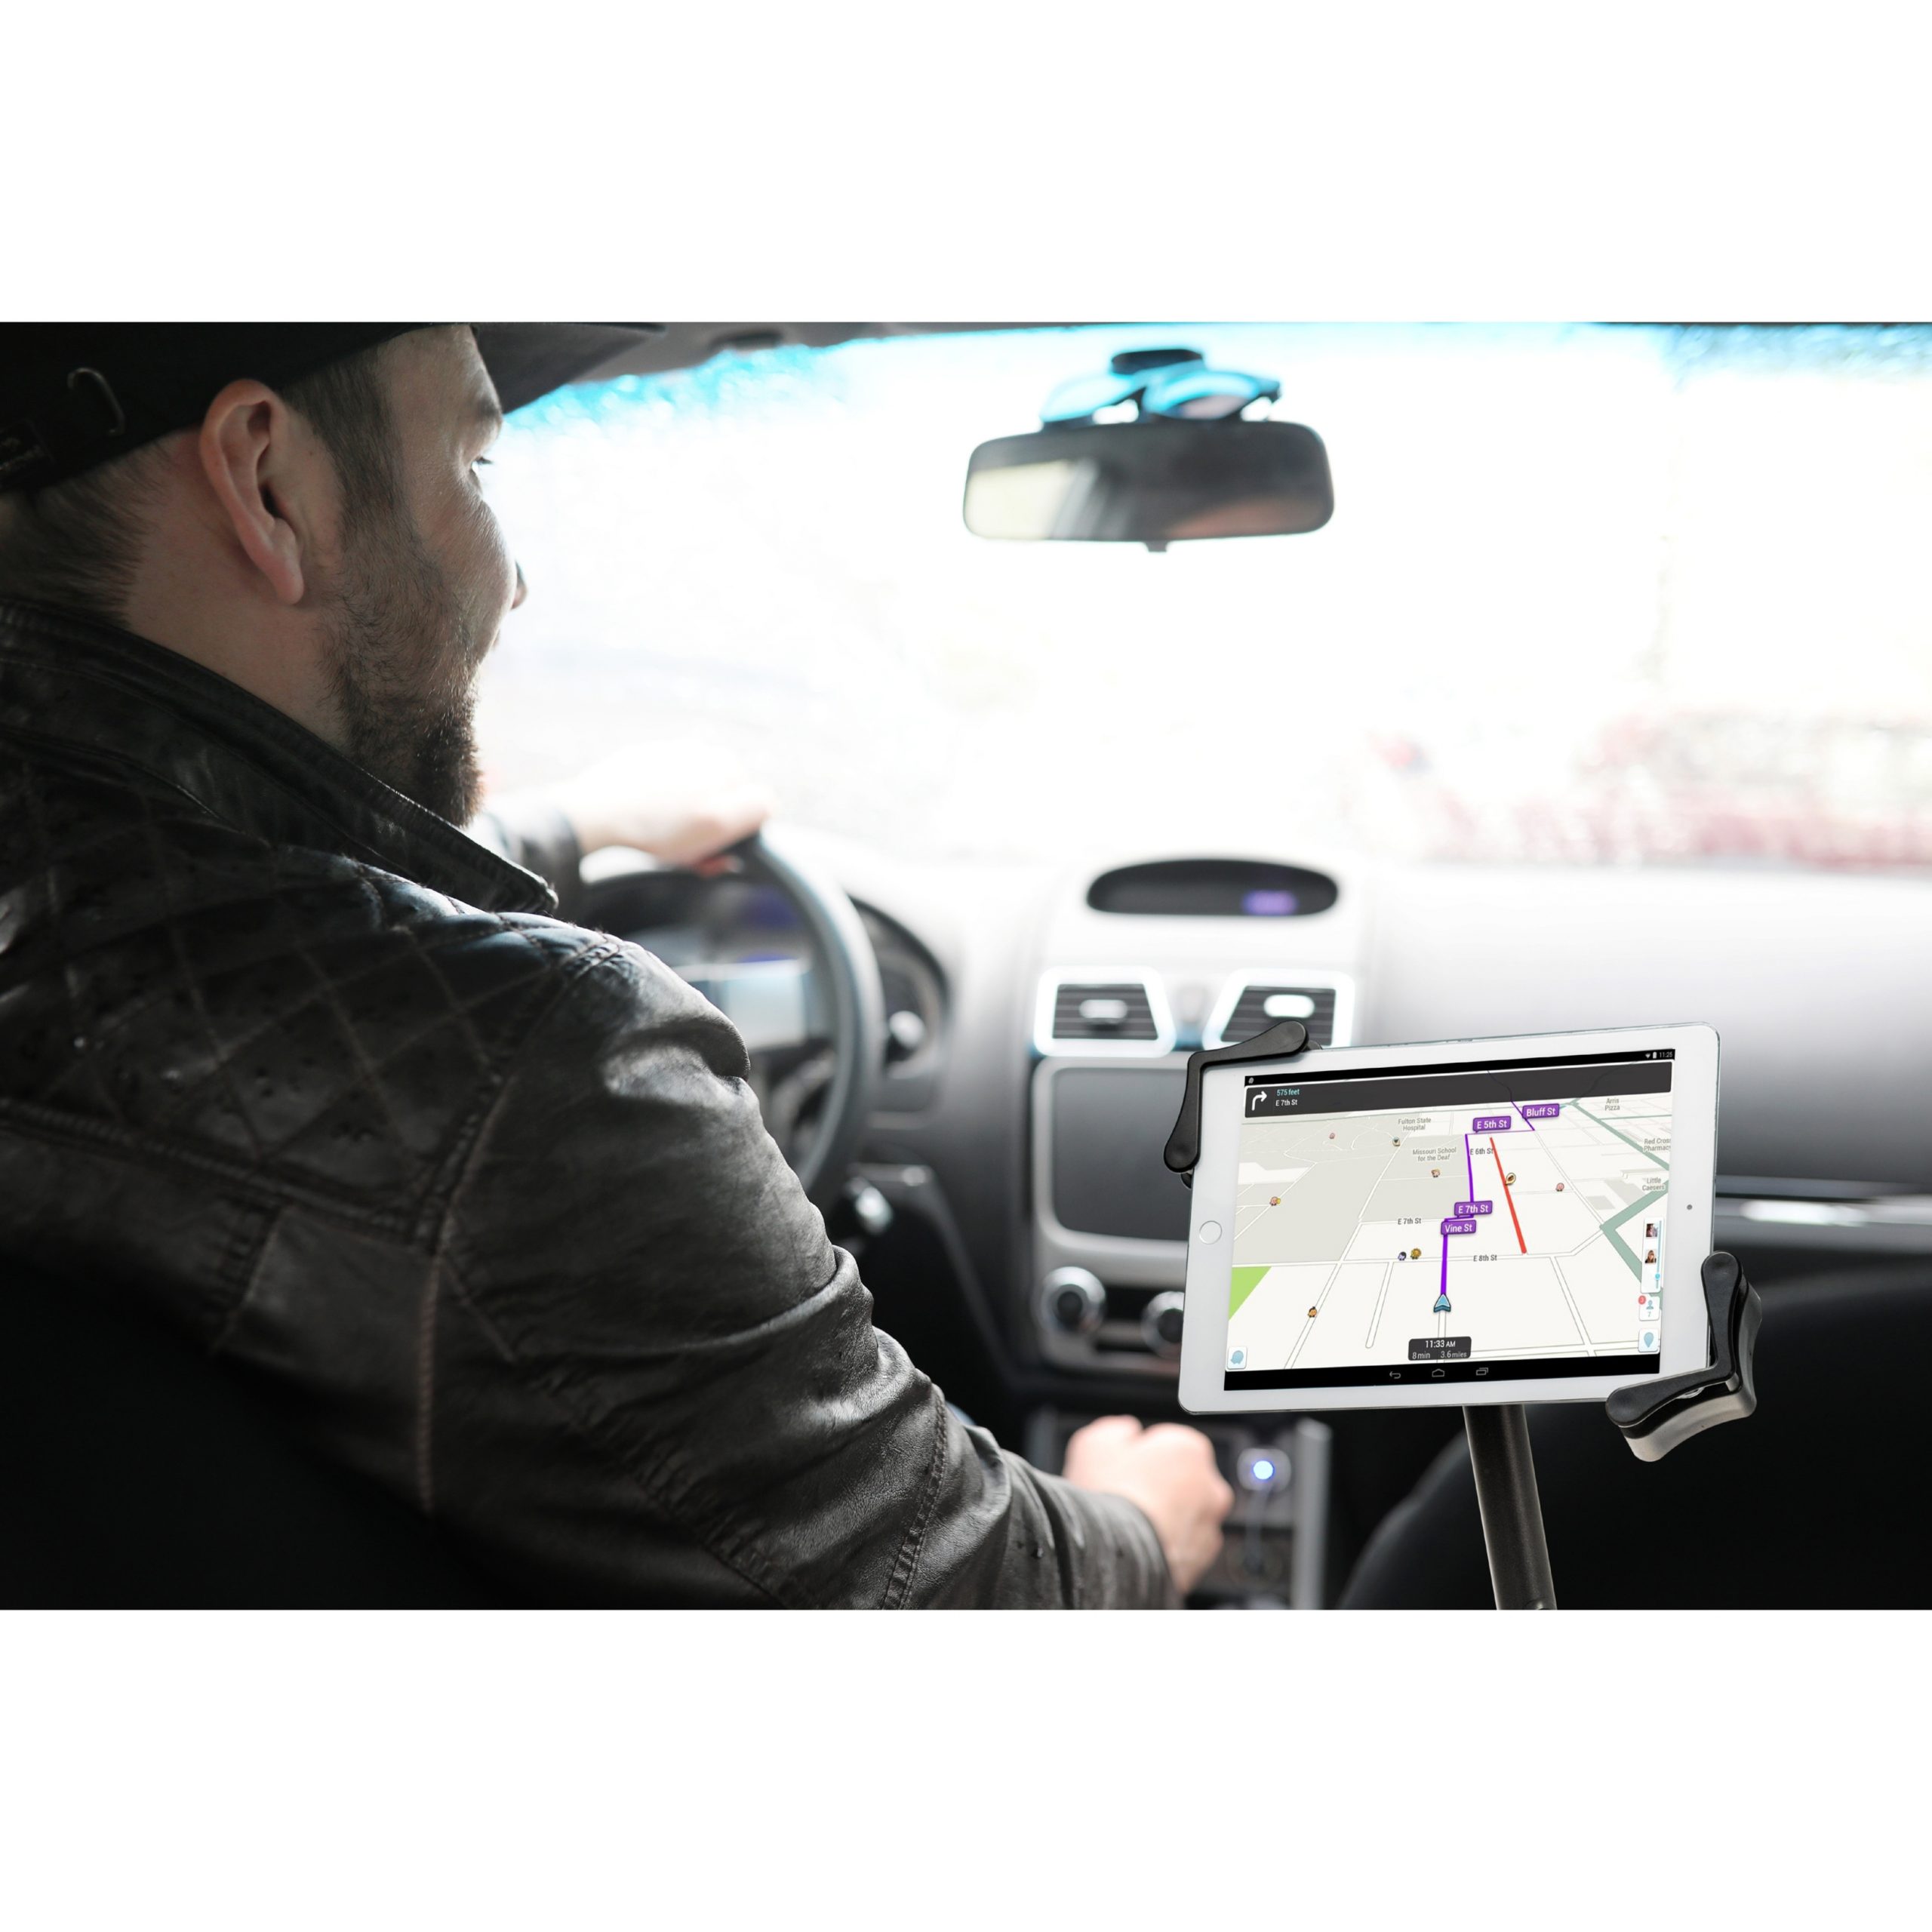 Cta Digital Multi-flex Vehicle Mount for Tablet, iPad Pro, iPad Air, iPad mini12.9" Screen Support1 PAD-MFCM - Corporate Armor